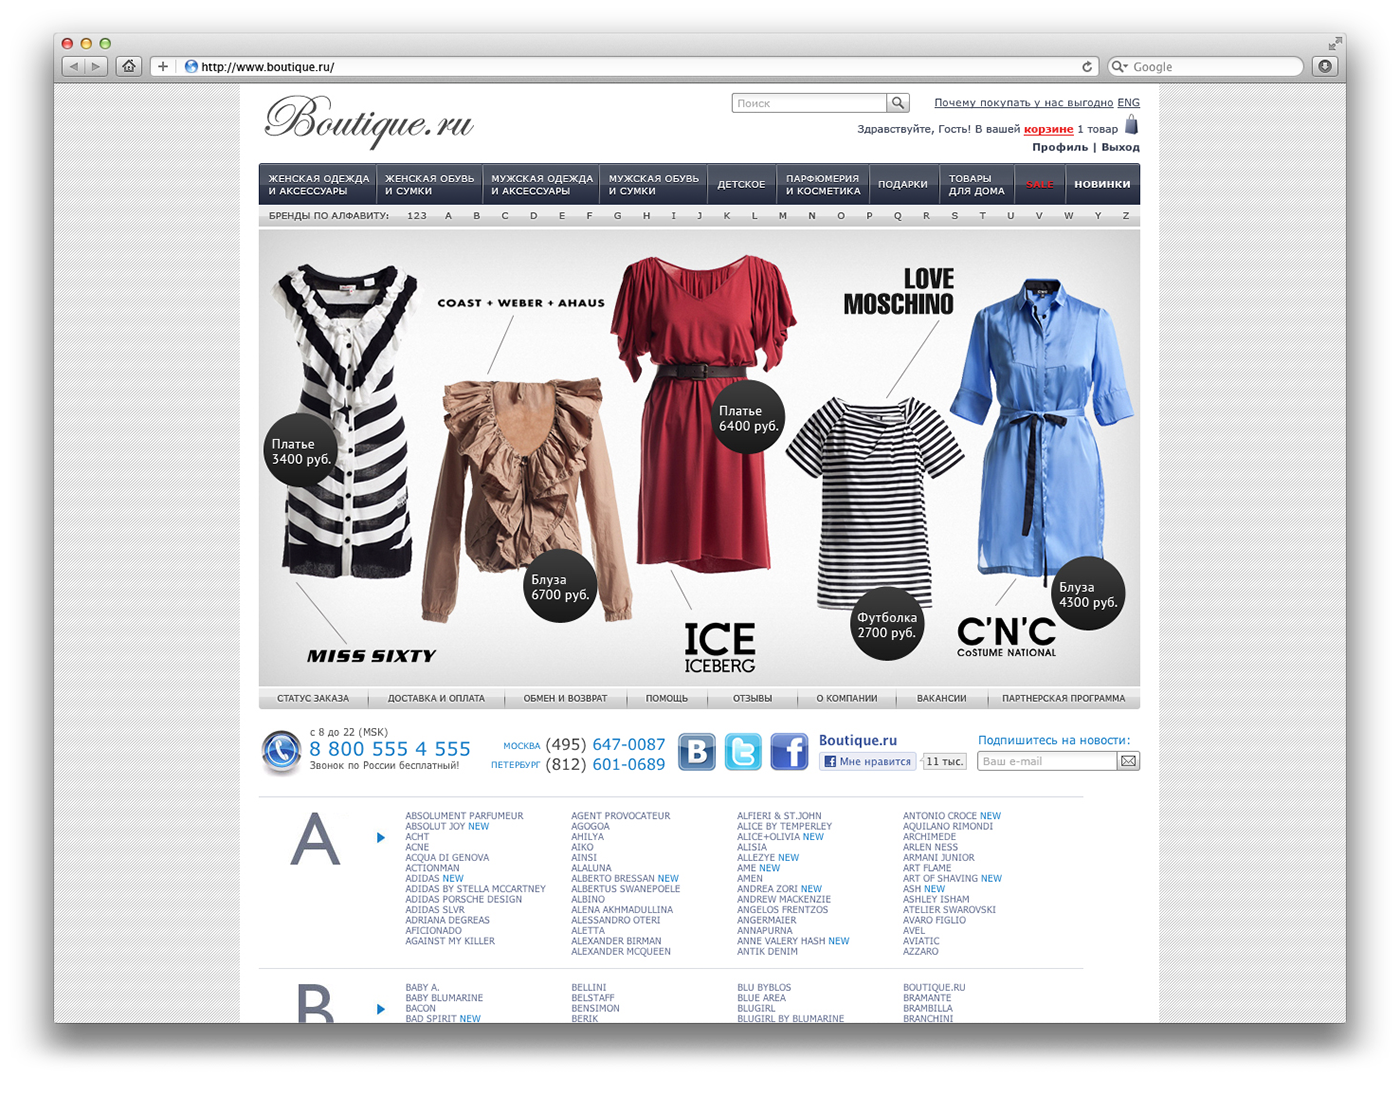 Boutique ru. Бутик ру интернет-магазин. Butik ru интернет магазин одежды. Web дизайн бренда магазина одежды.